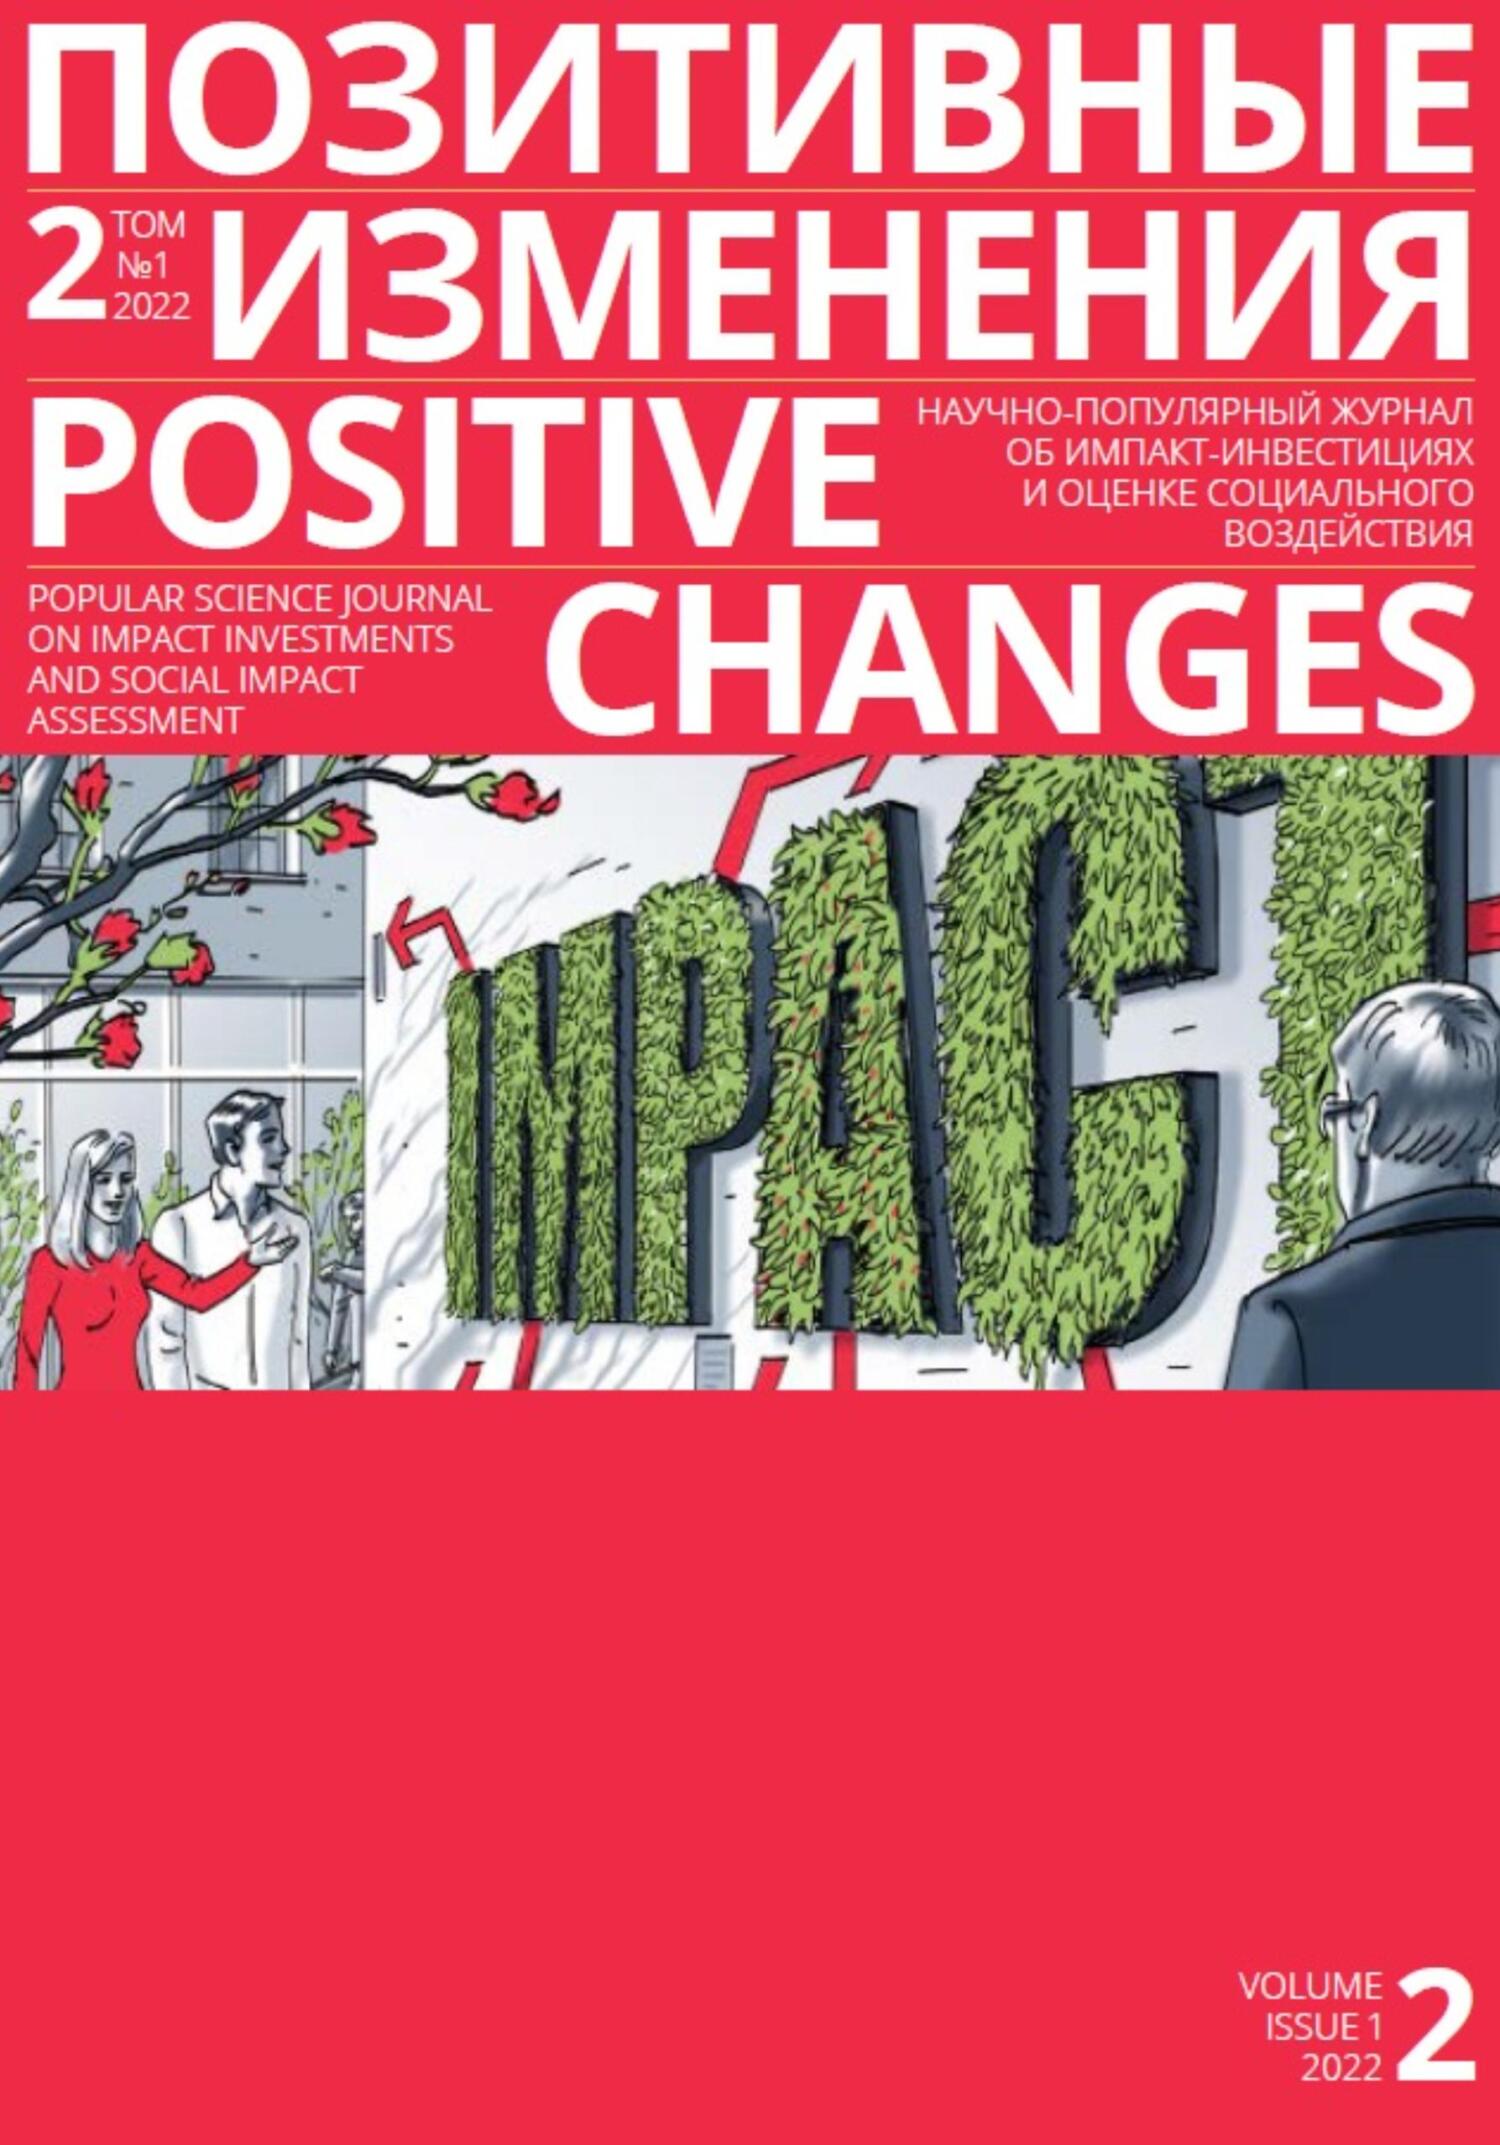 Позитивные изменения. Том 2, № 1 (2022). Positive changes. Volume 2, Issue 1 (2022) - Редакция журнала «Позитивные изменения»